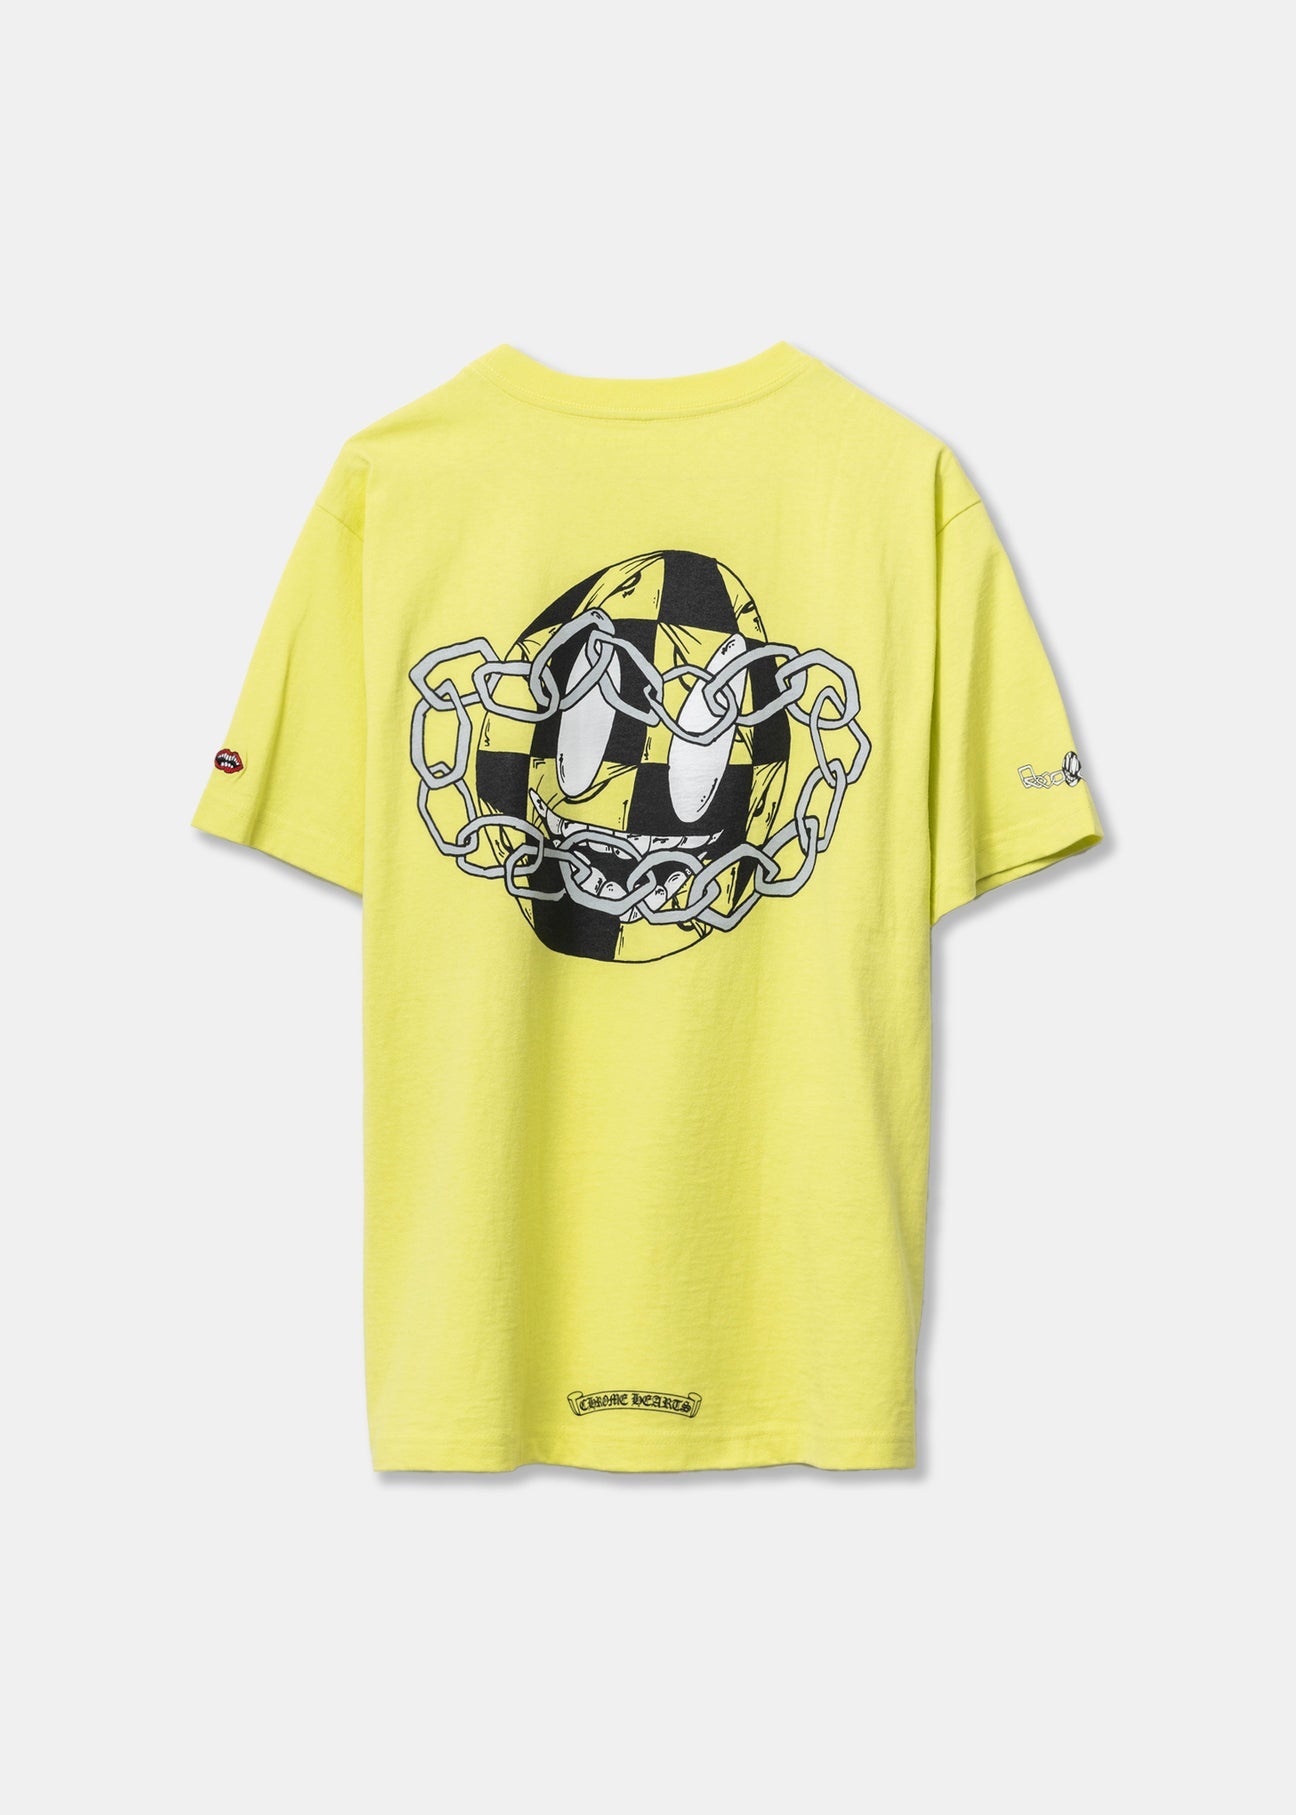 Neon Yellow Chrome Hearts x Matty Boy Chain Face T-Shirt - 2